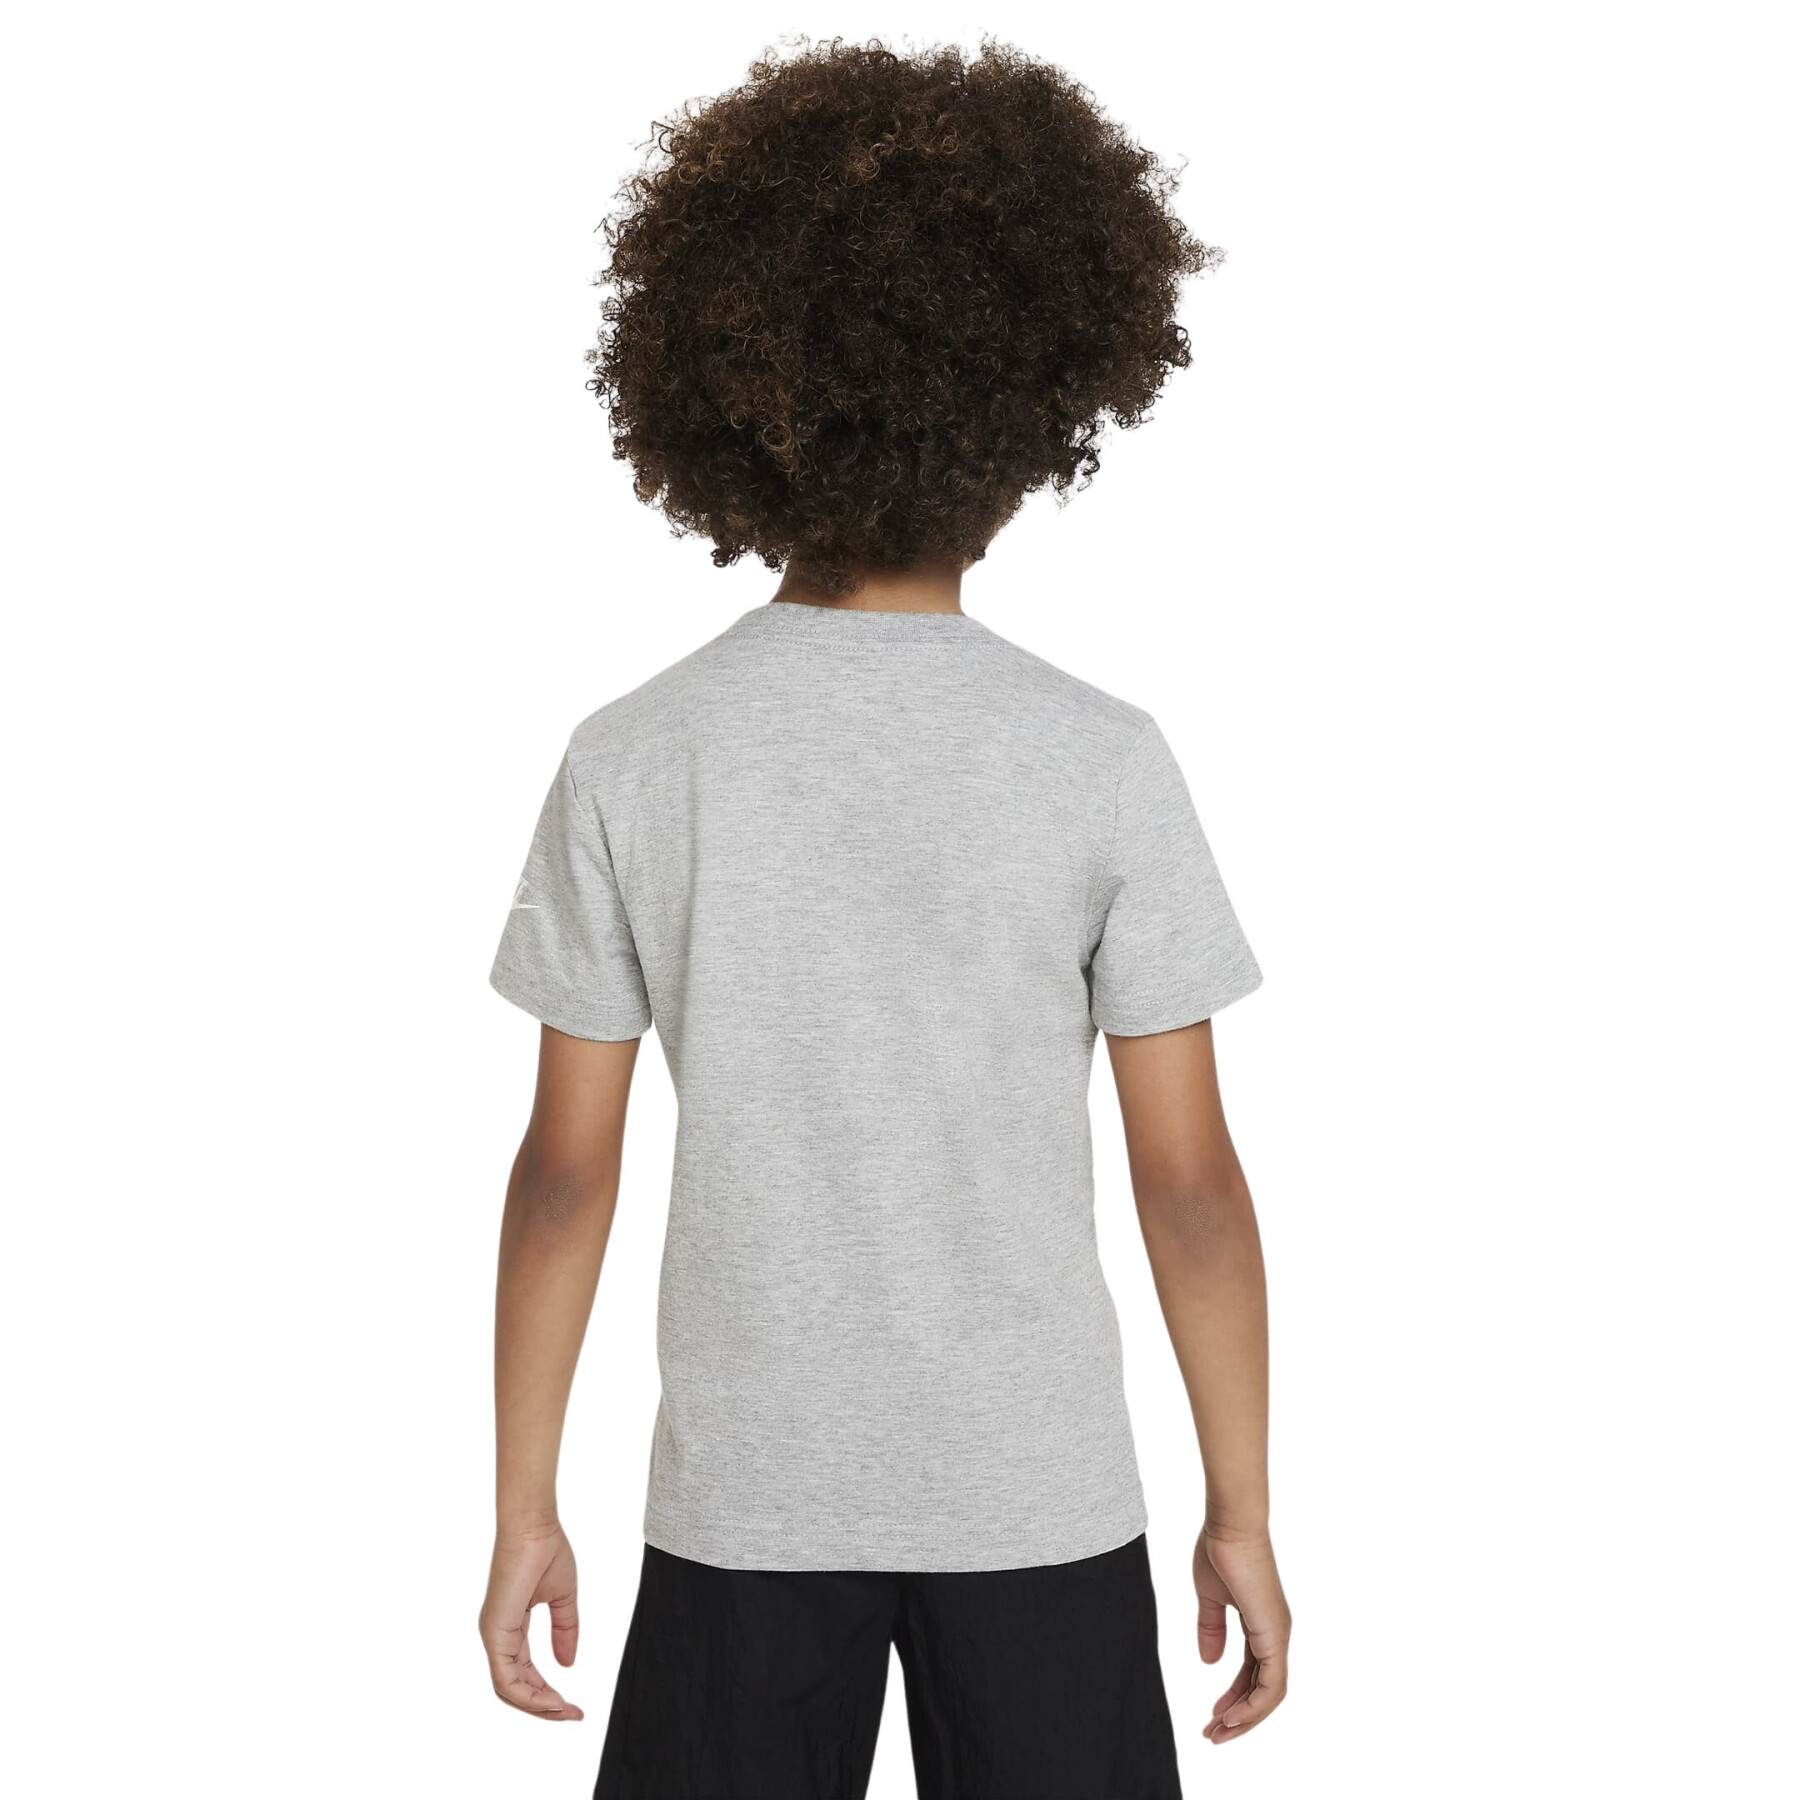 T-shirt per bambini Nike Futura Evergreen